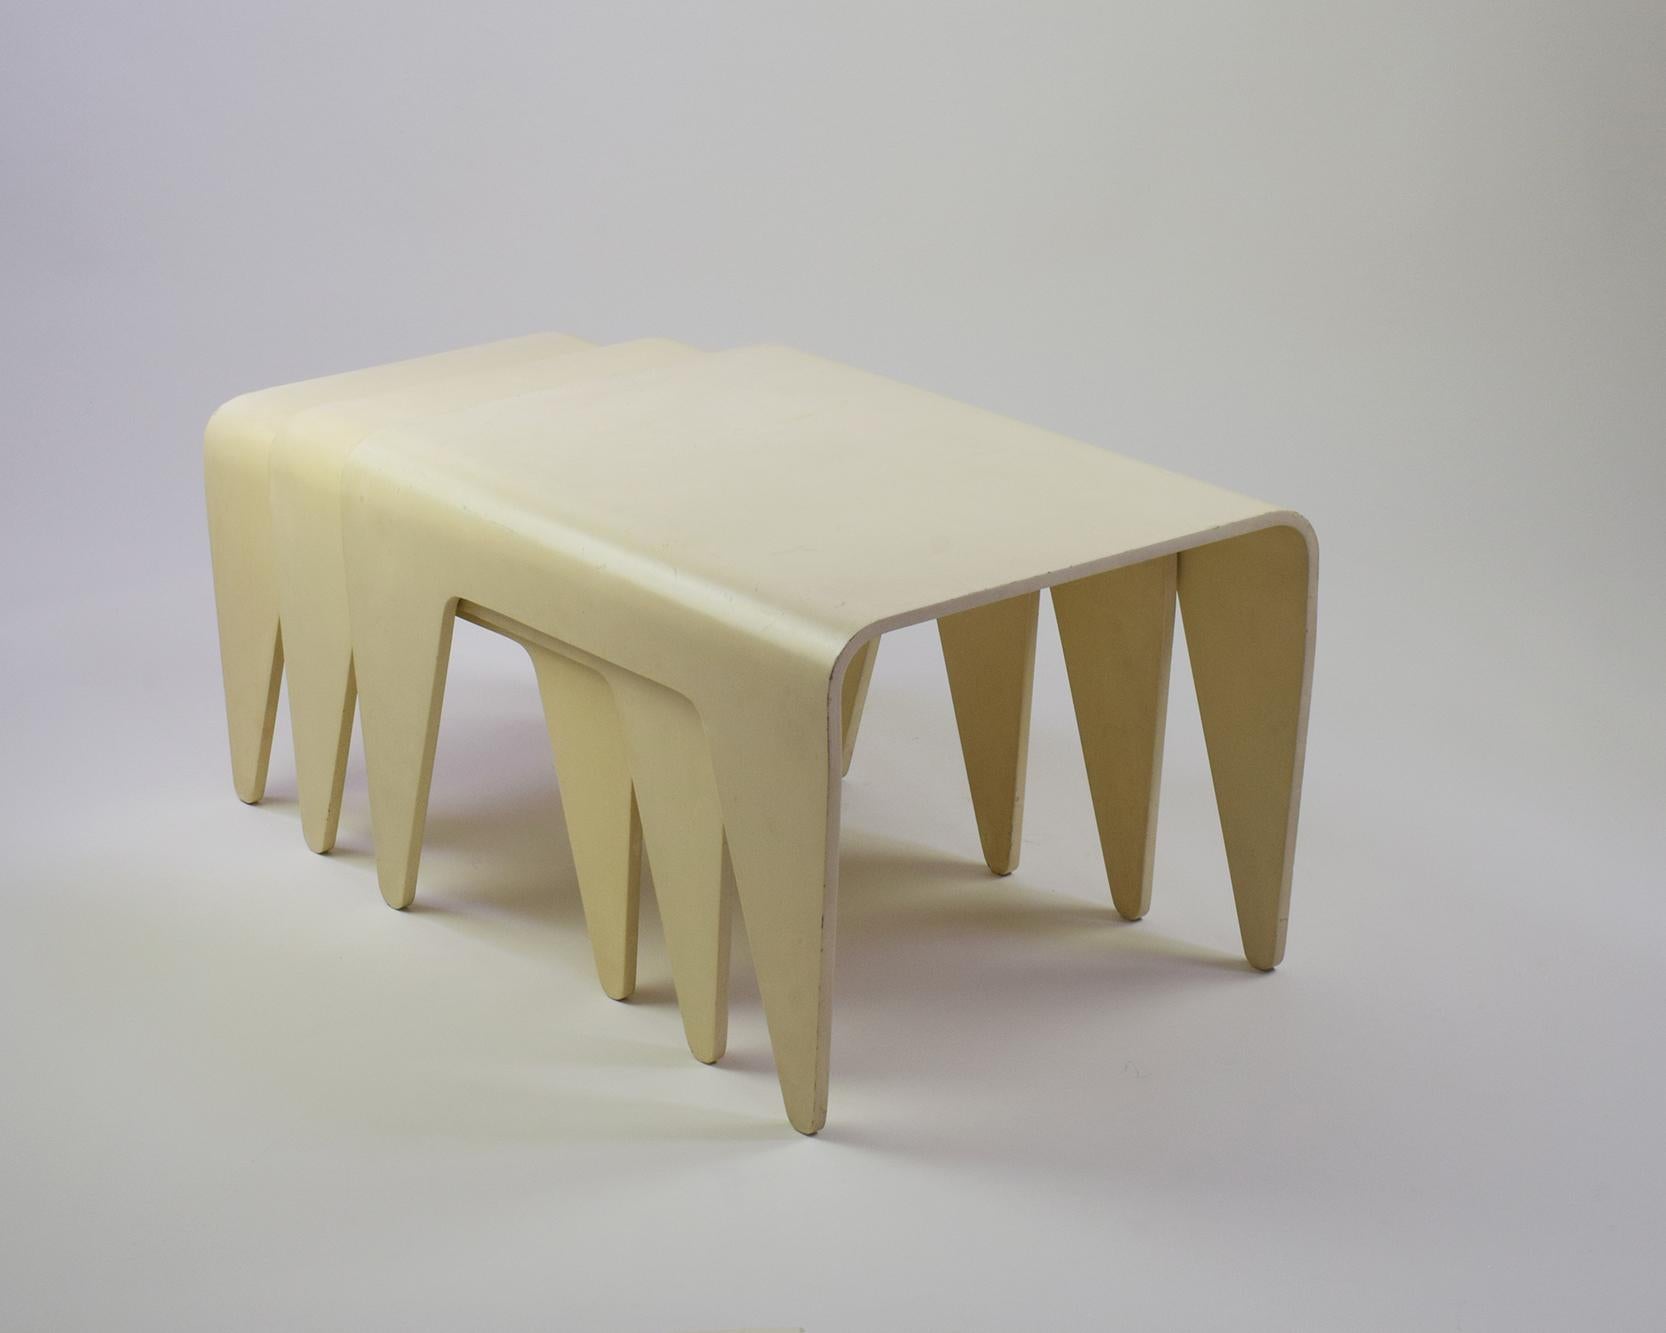 20th Century Marcel Breuer, 'Isokon Nesting Tables, ' Set of Three Tables, for Isokon, 1936